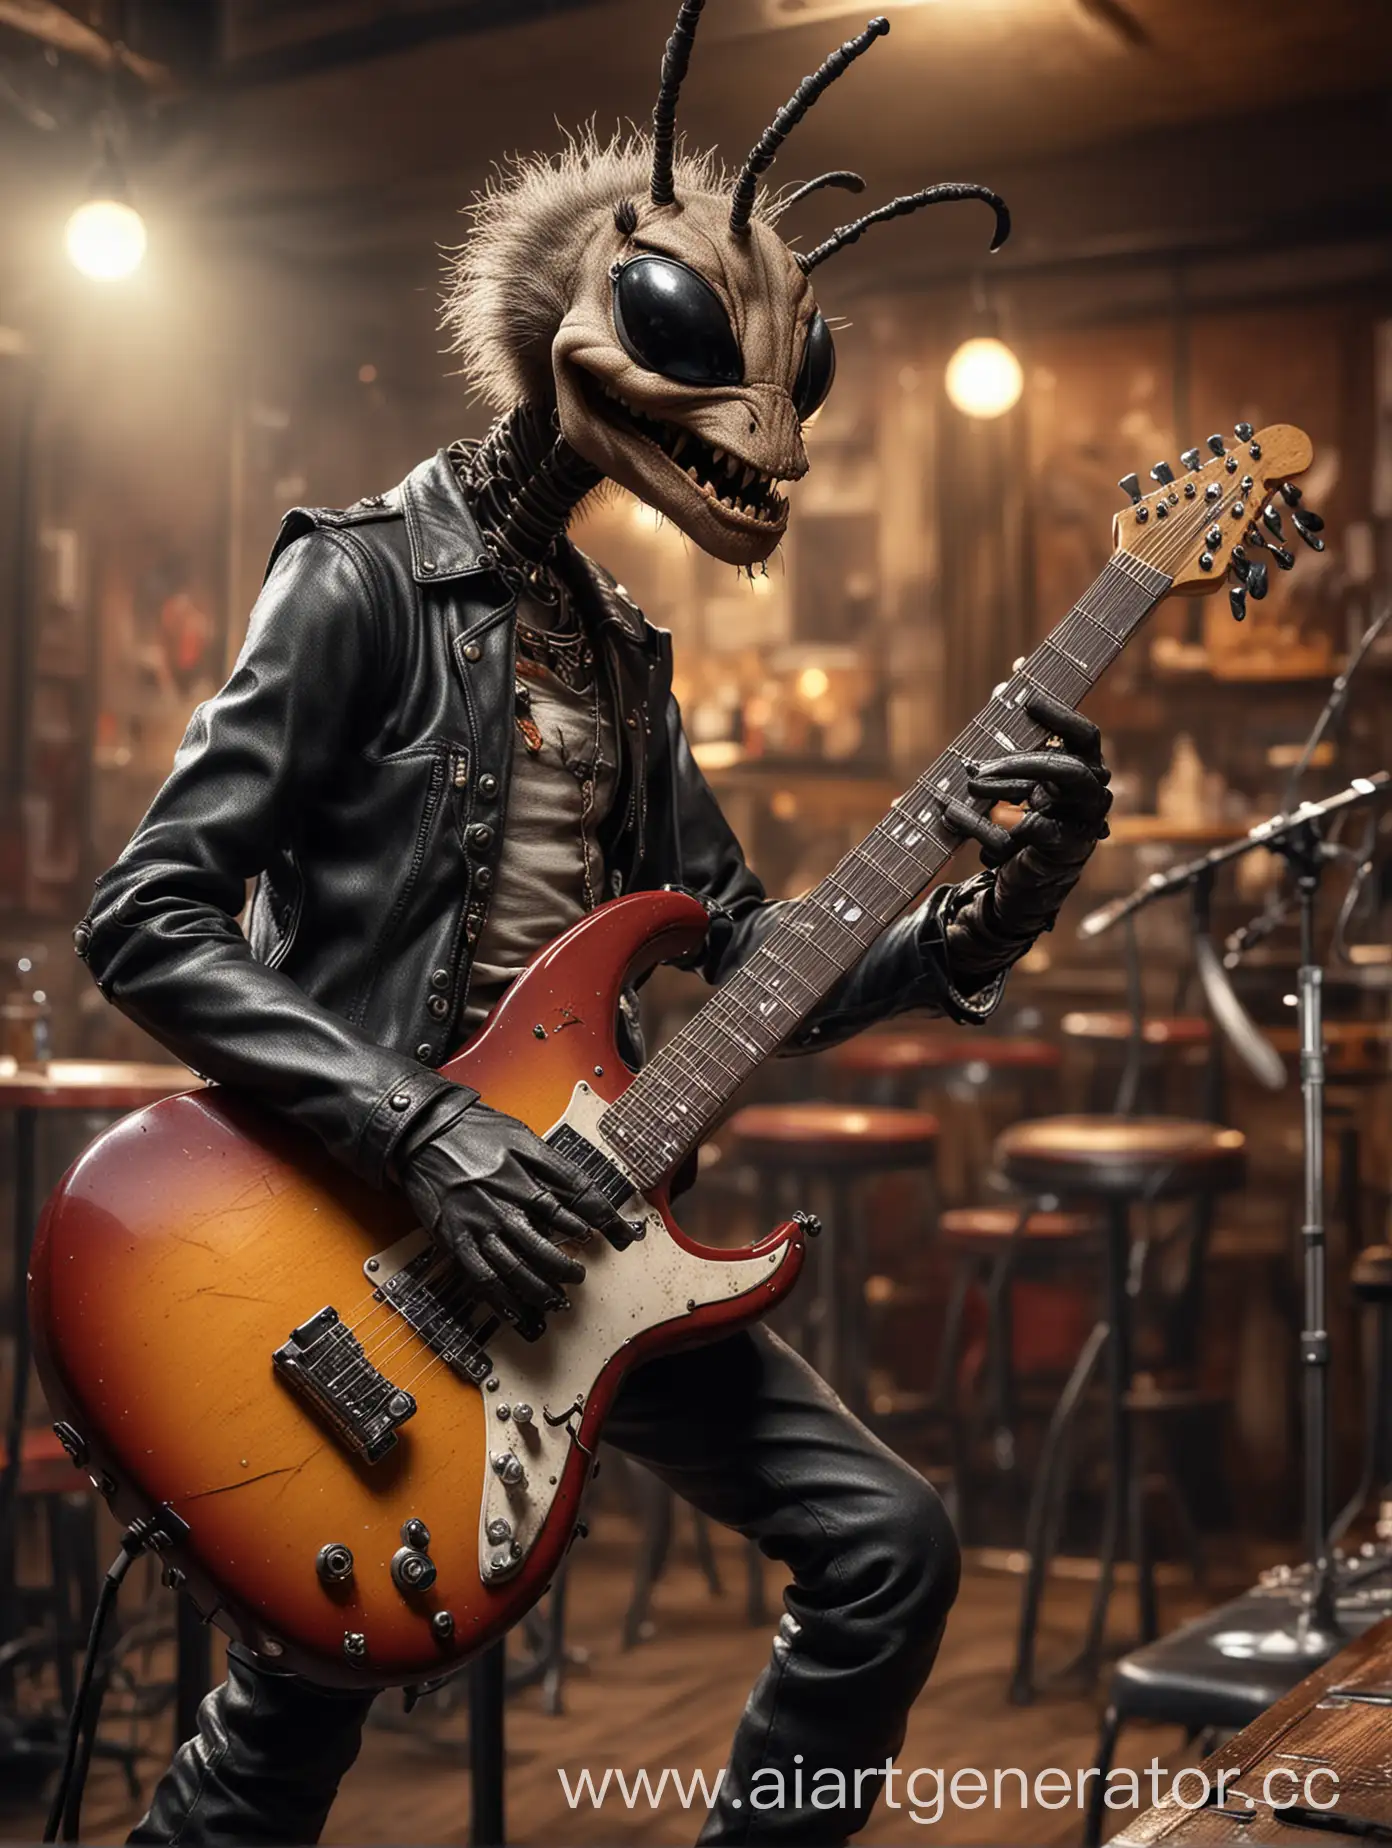 CloseUp-Photo-of-Ant-Rocker-Playing-Electric-Guitar-in-Bar